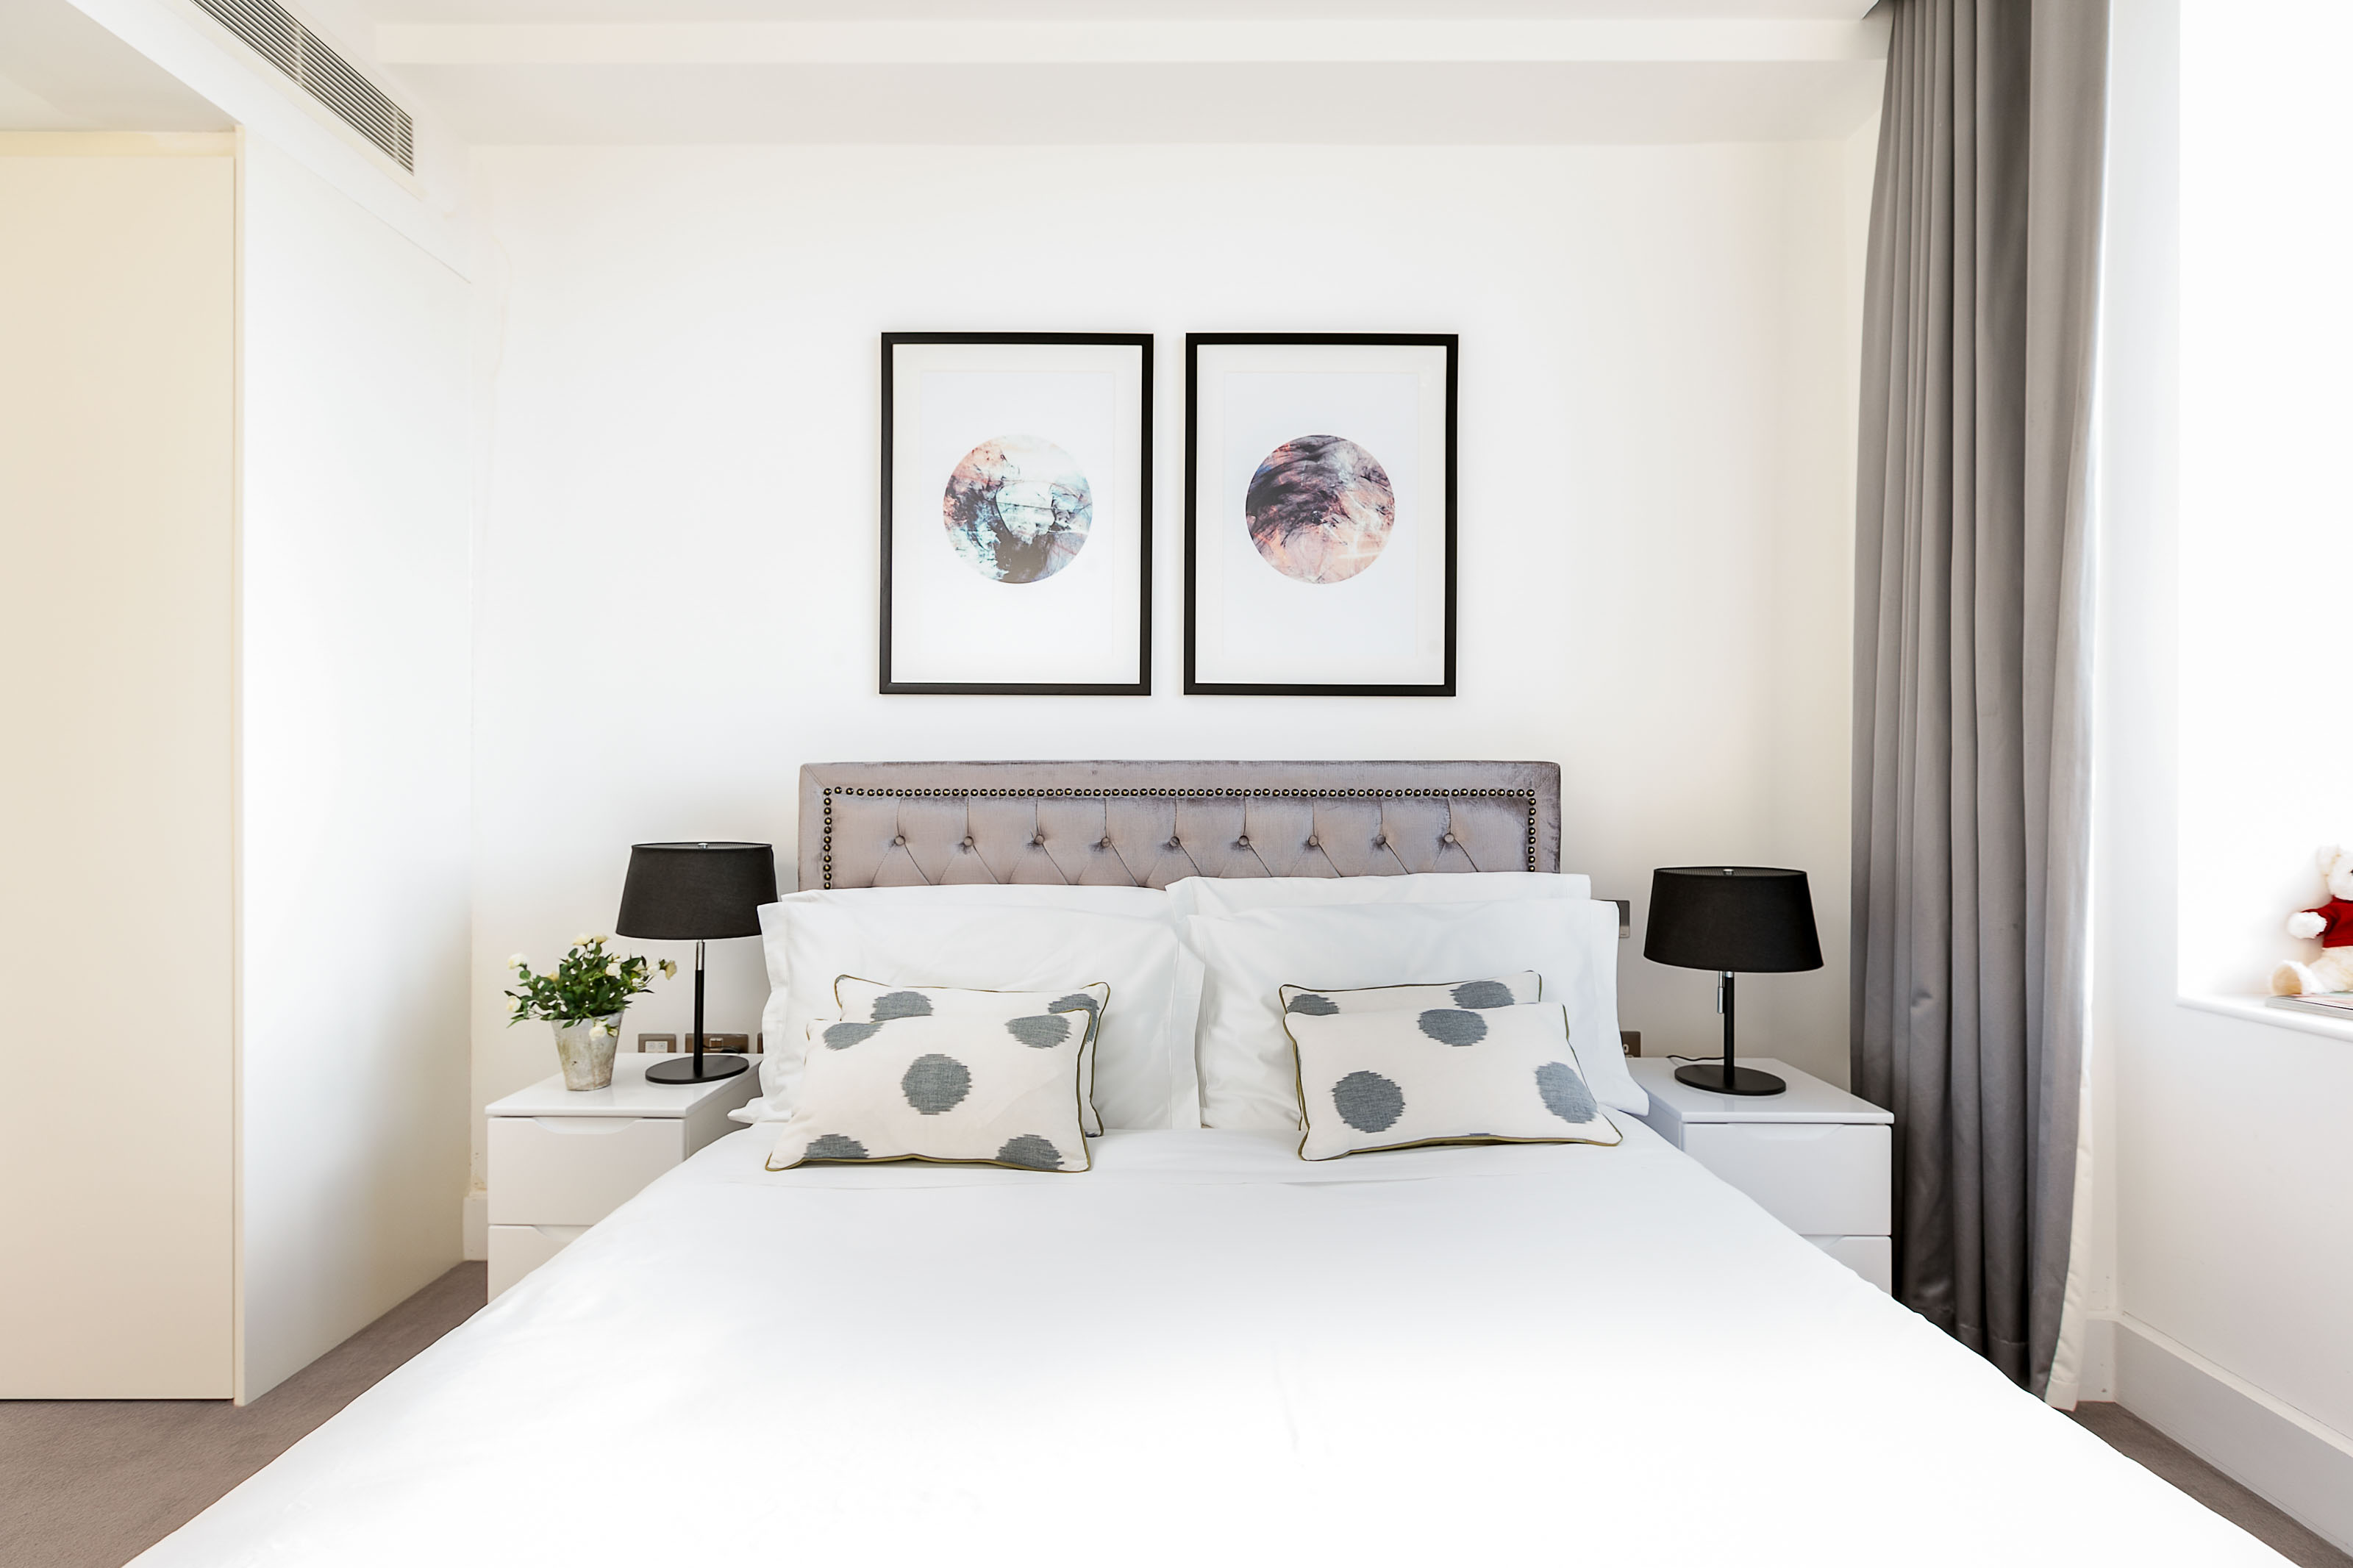 Lovelydays luxury service apartment rental - London - Covent Garden - Prince's House 605 - Lovelysuite - 2 bedrooms - 2 bathrooms - King bed - 8f3922c17bc6 - Lovelydays